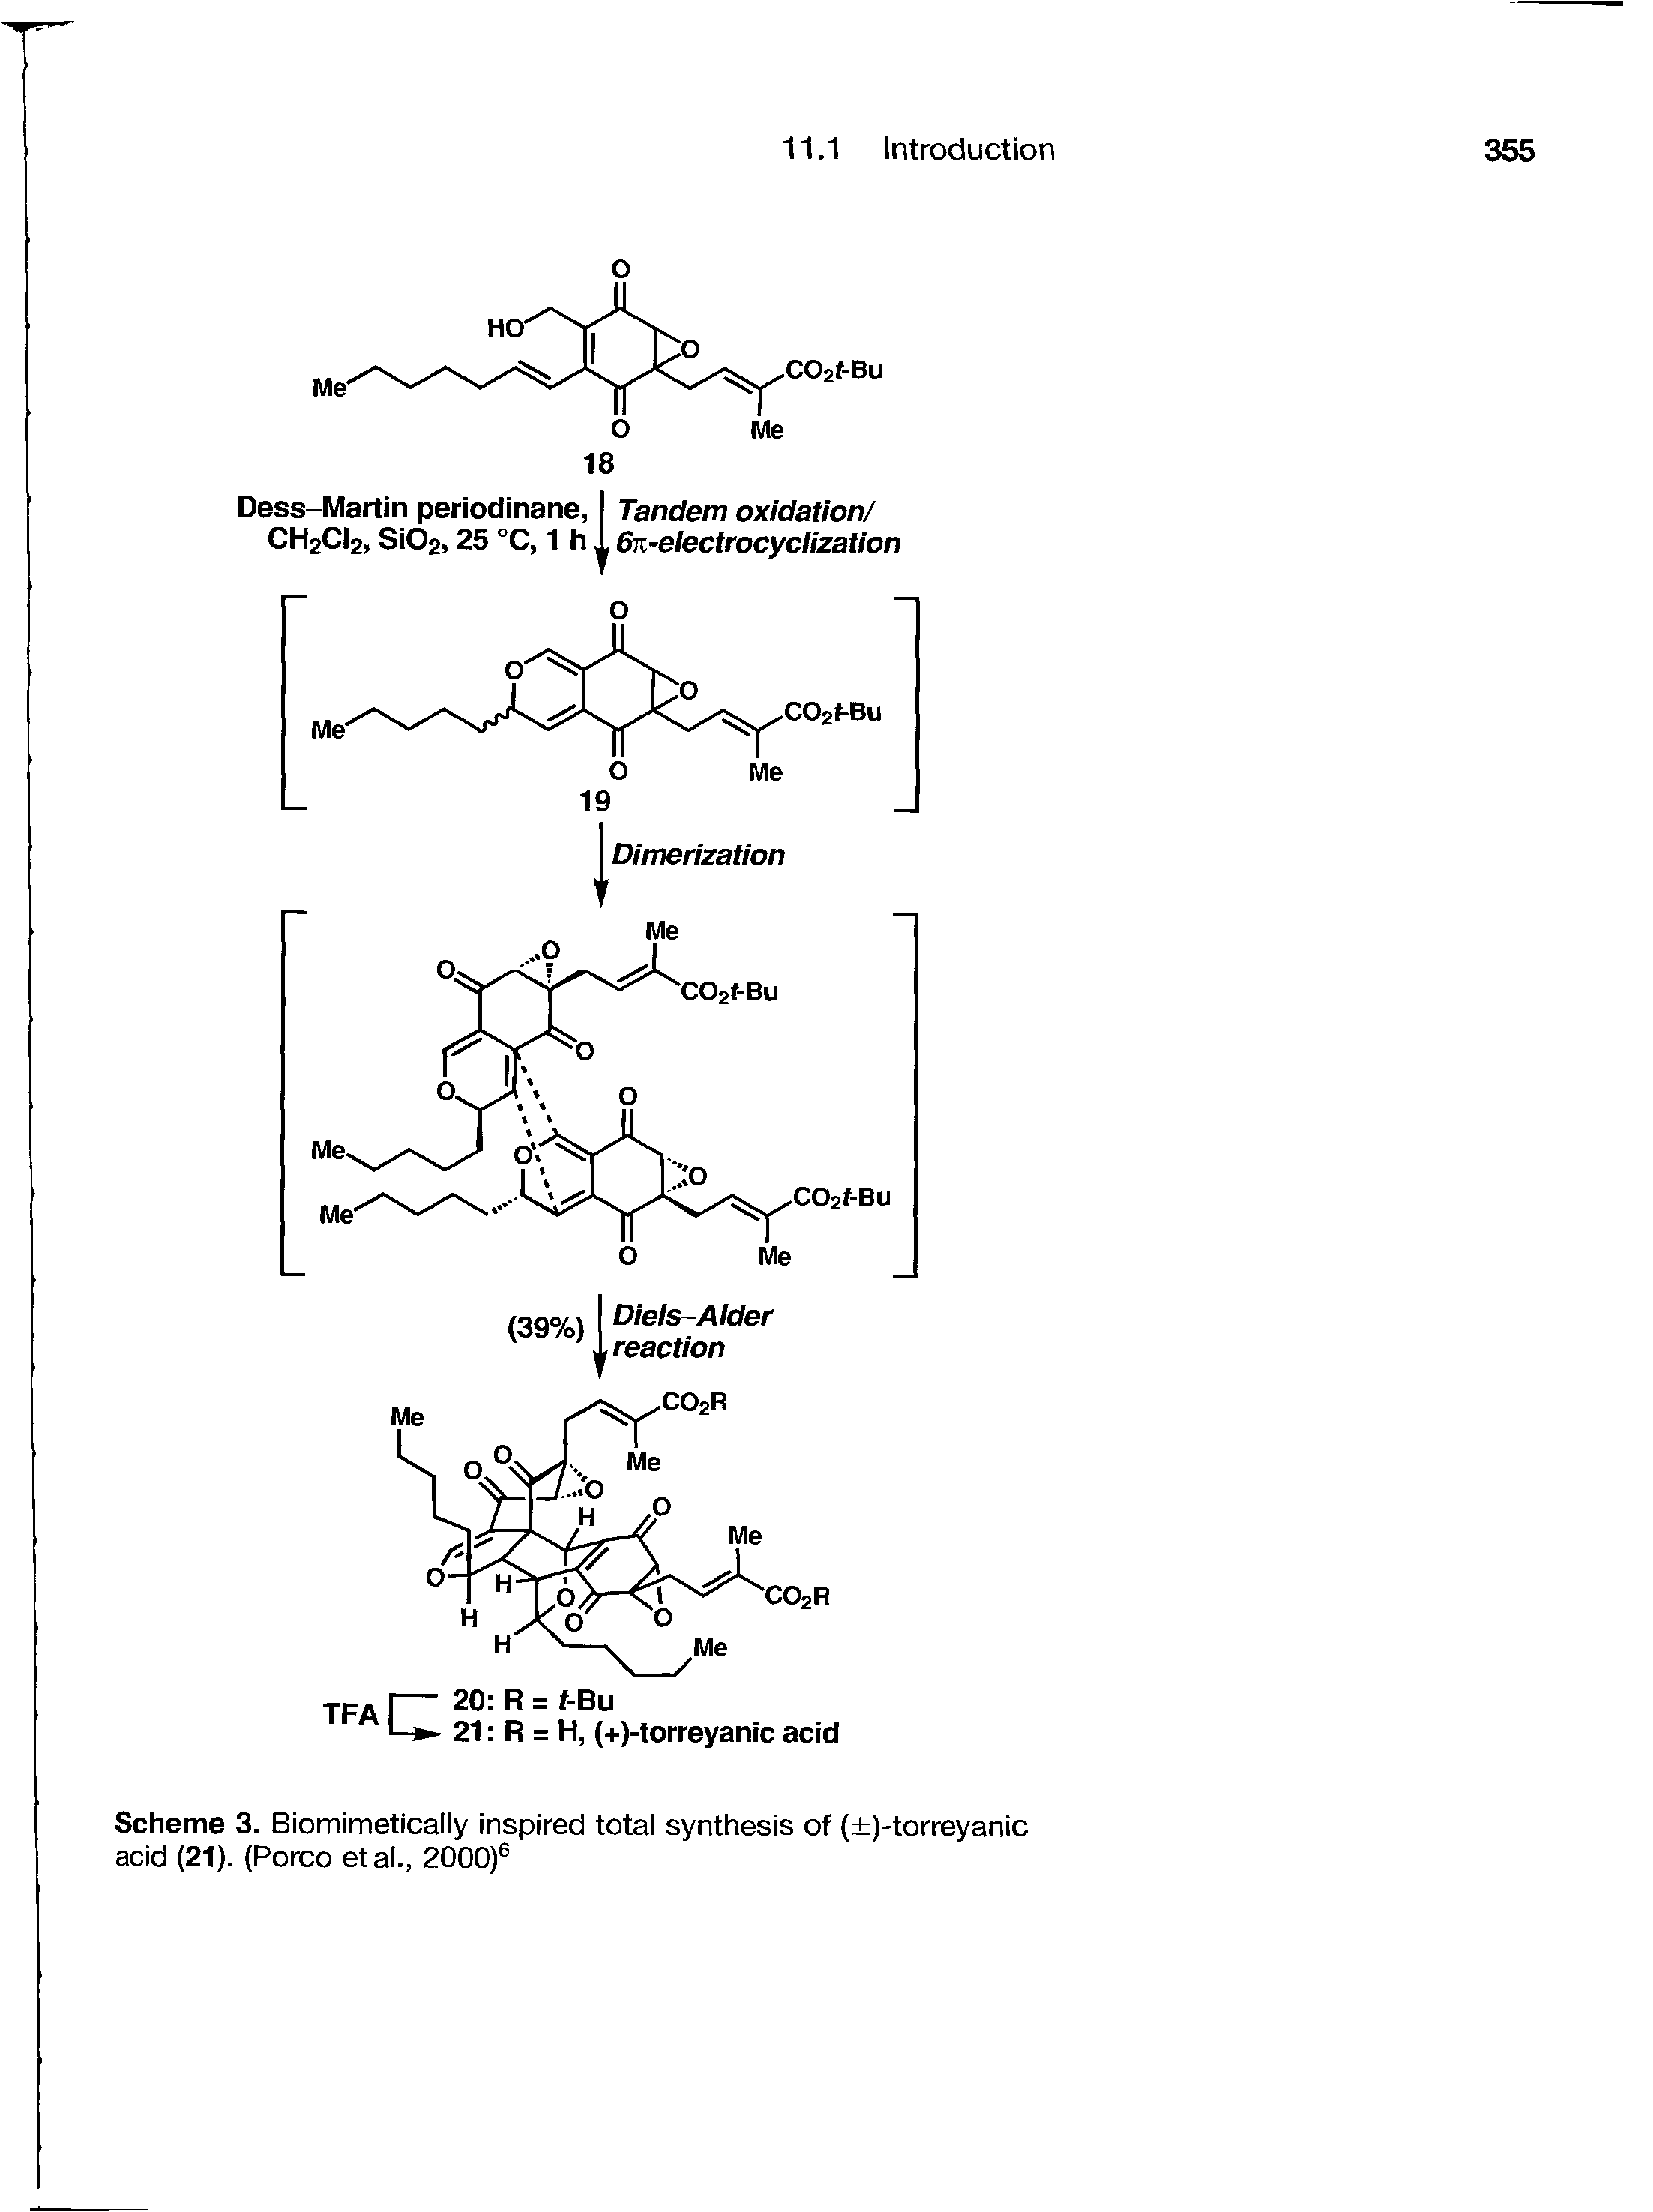 Scheme 3. Biomimetically inspired total synthesis of (+)-torreyanic acid (21). (Porco etal., 2000) ...